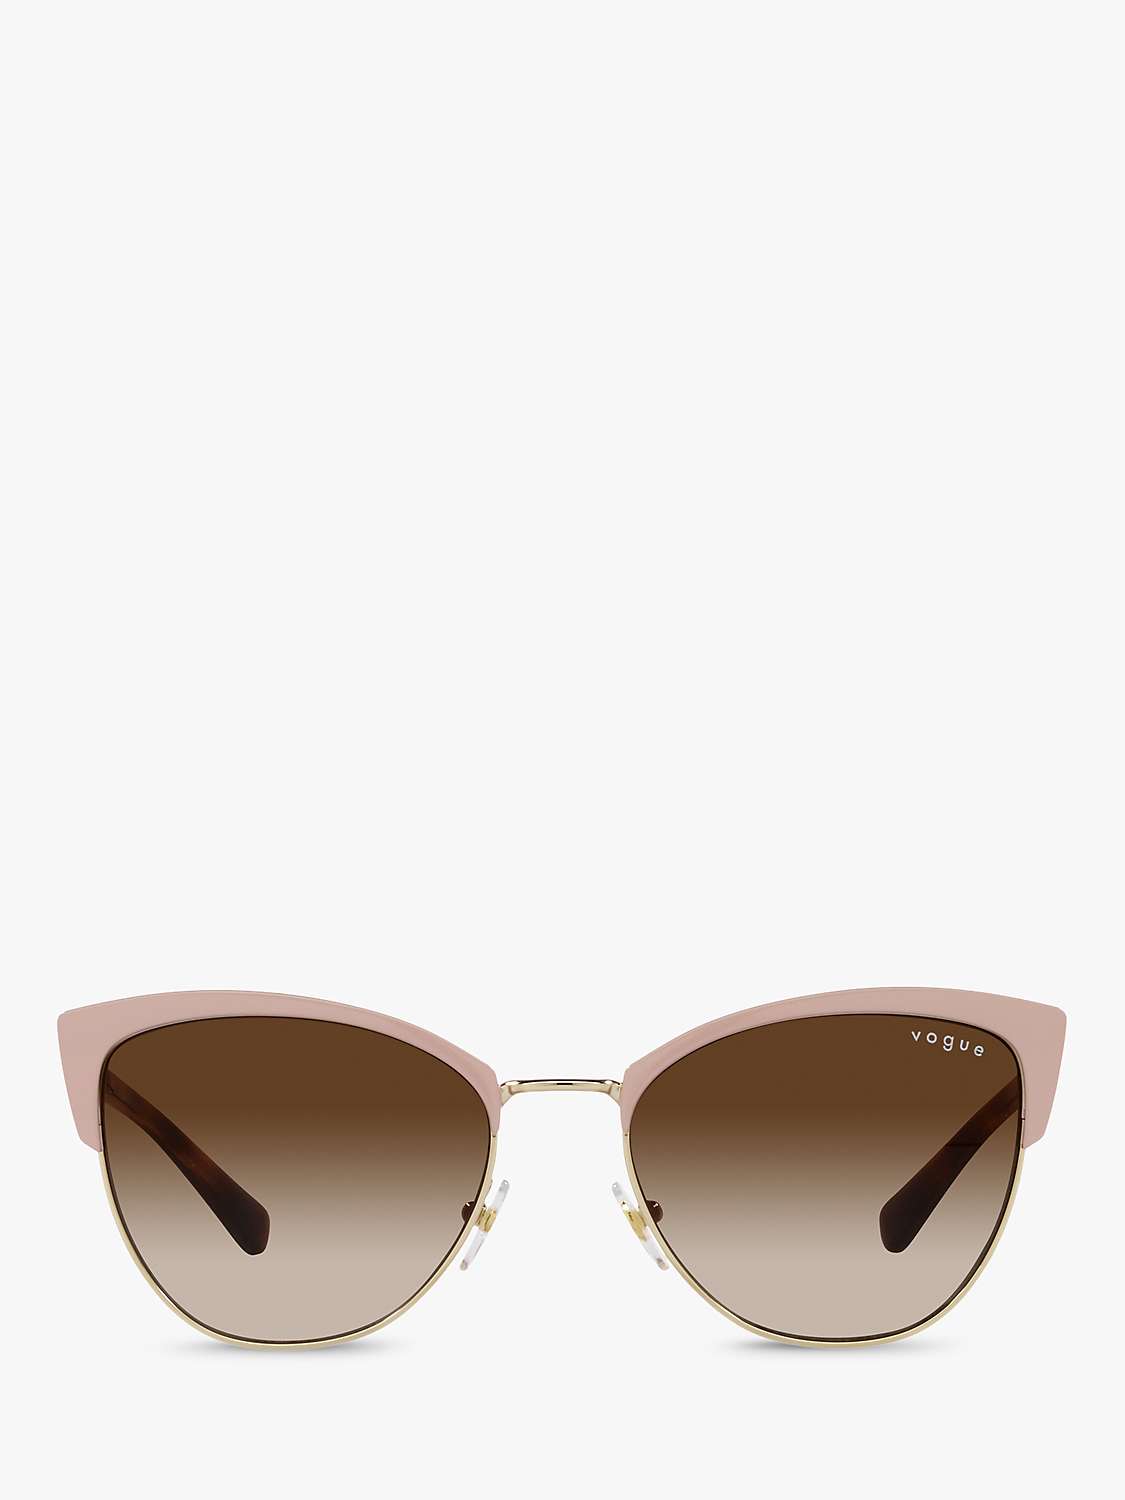 Buy Vogue VO4251S Women's Butterfly Sunglasses, Beige/Brown Gradient Online at johnlewis.com